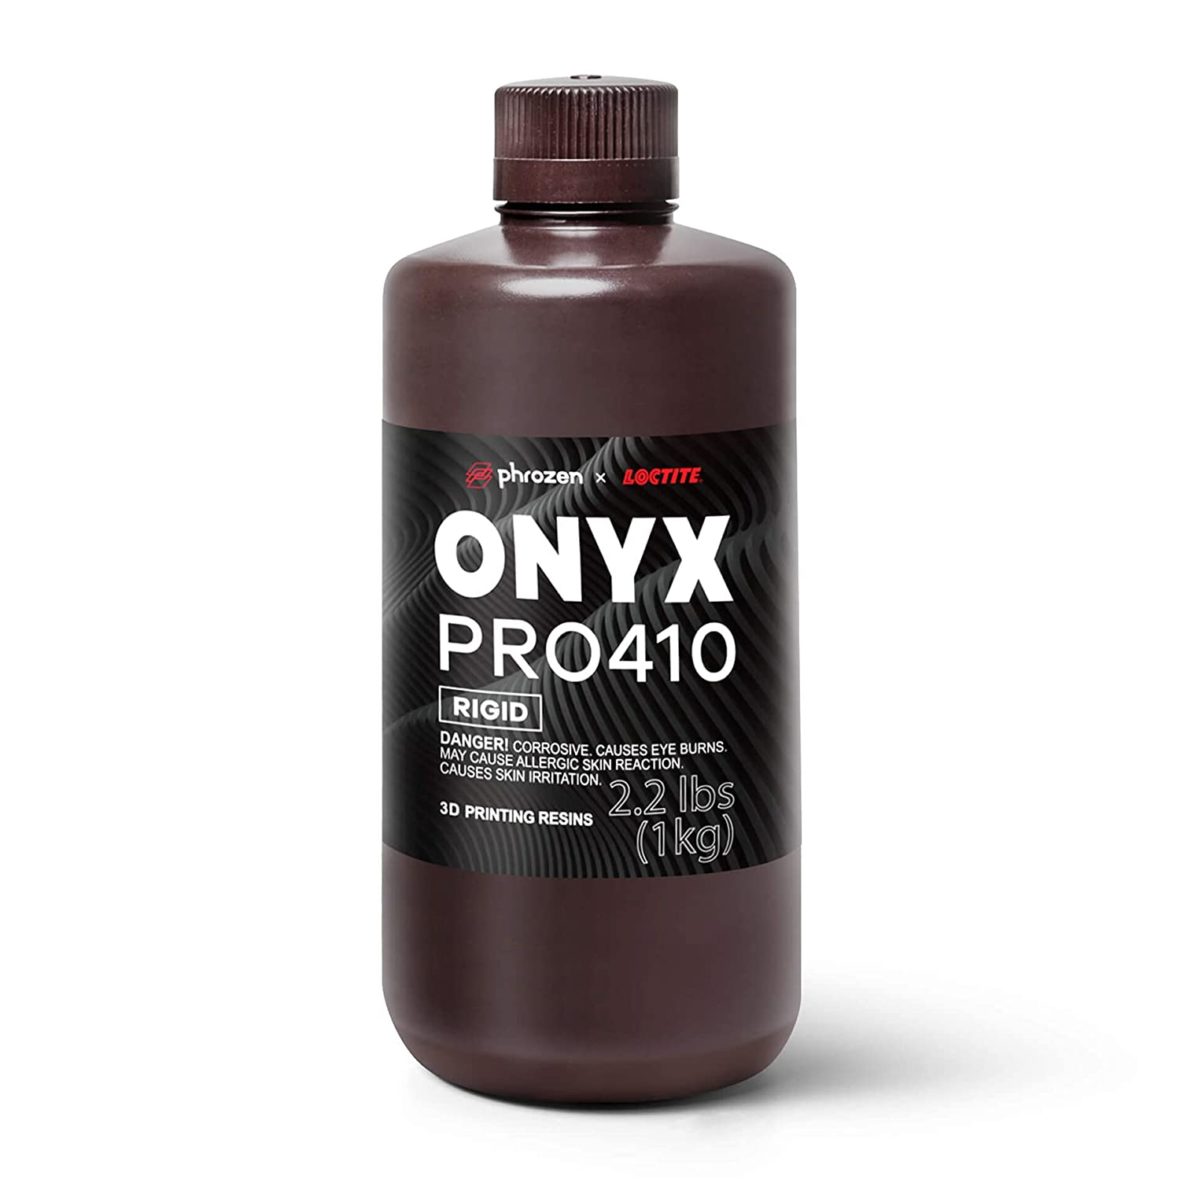 Phrozen Loctite Onyx Rigid Pro410 Schwarz 1KG